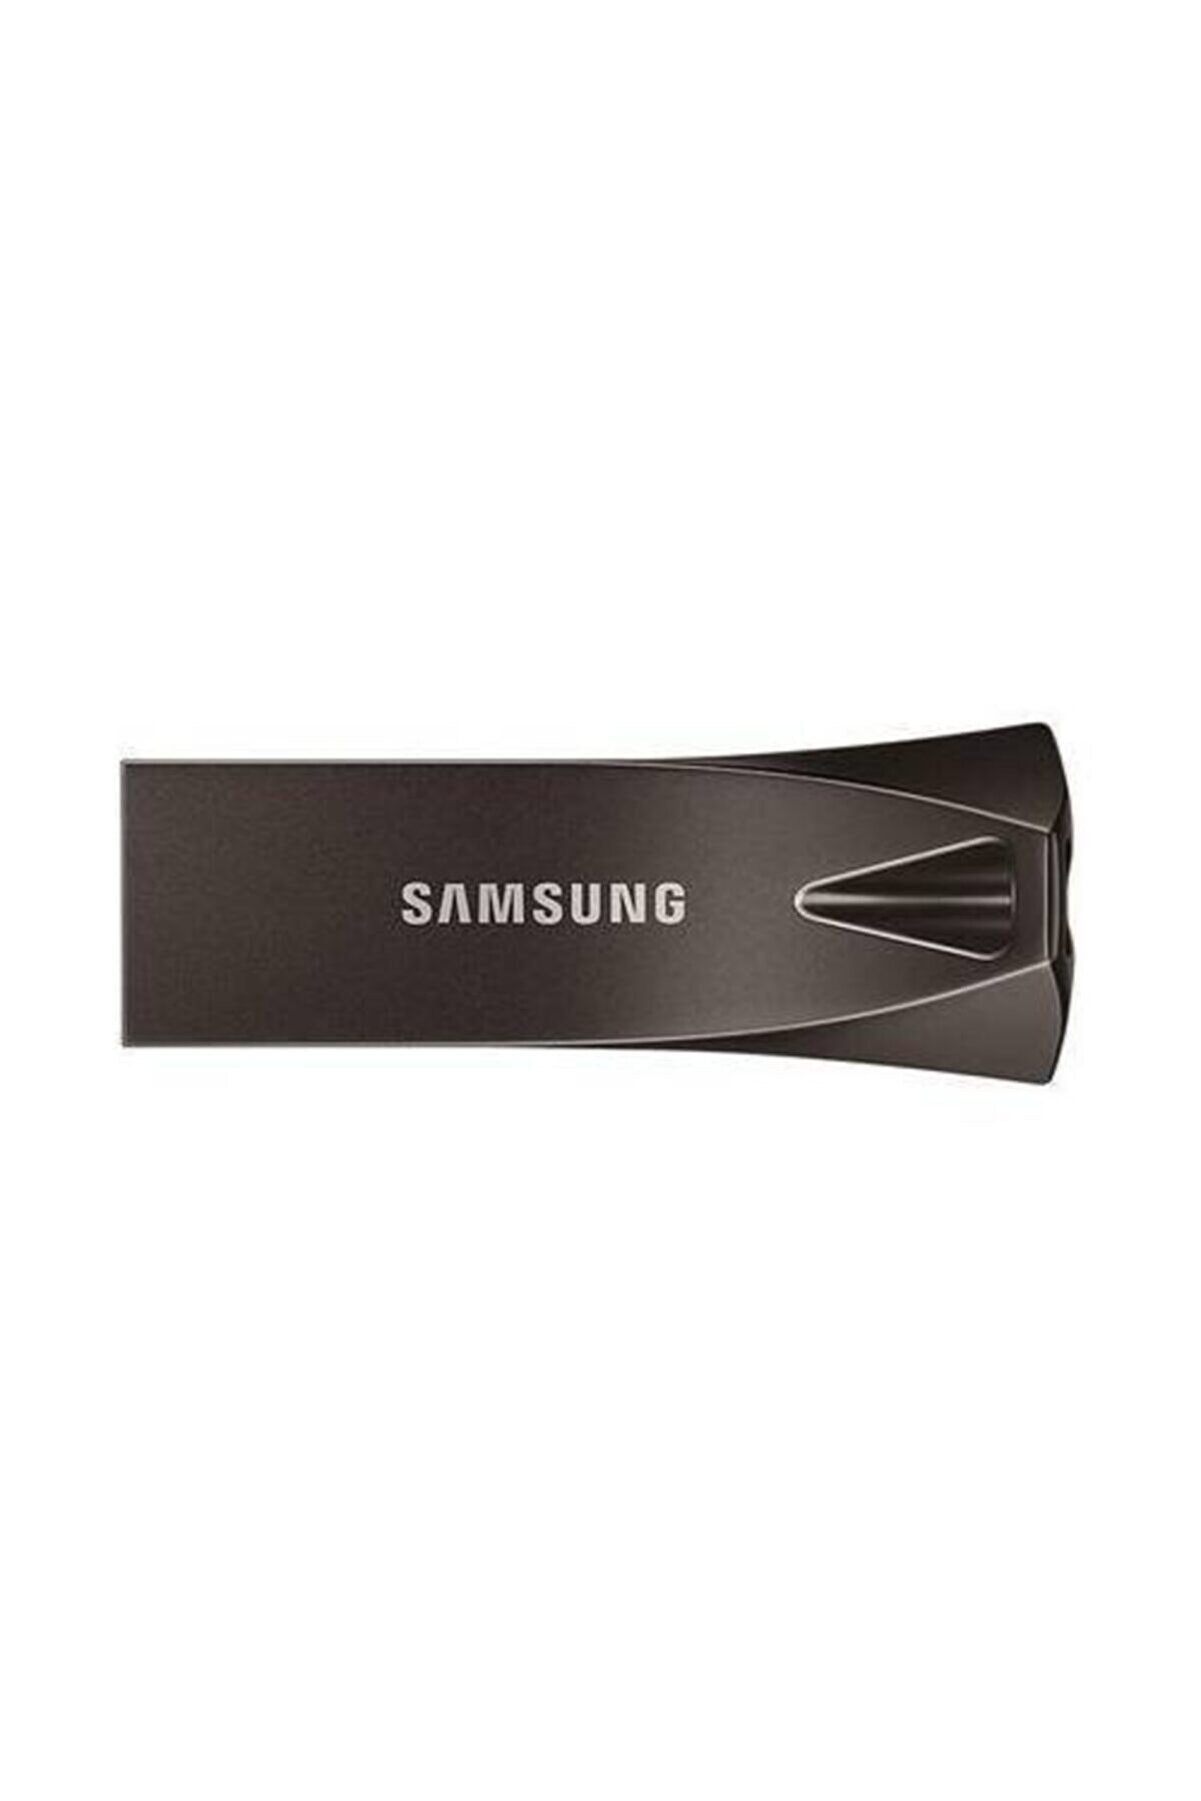 Samsung Bar Plus 32gb Muf-32be4/apc Usb 3.1 Bellek